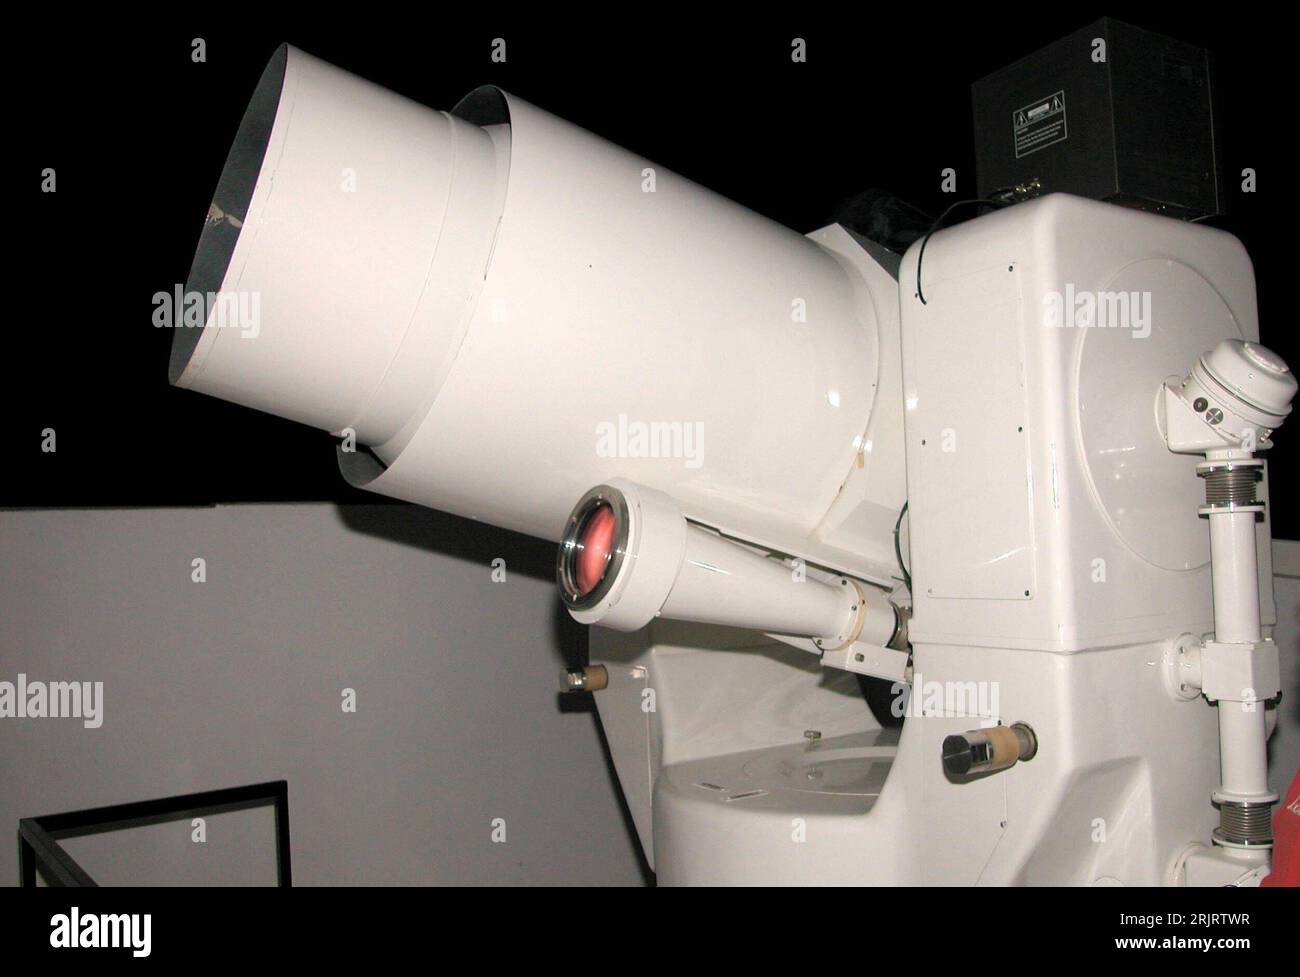 Laser range finder hi-res stock photography and images - Alamy